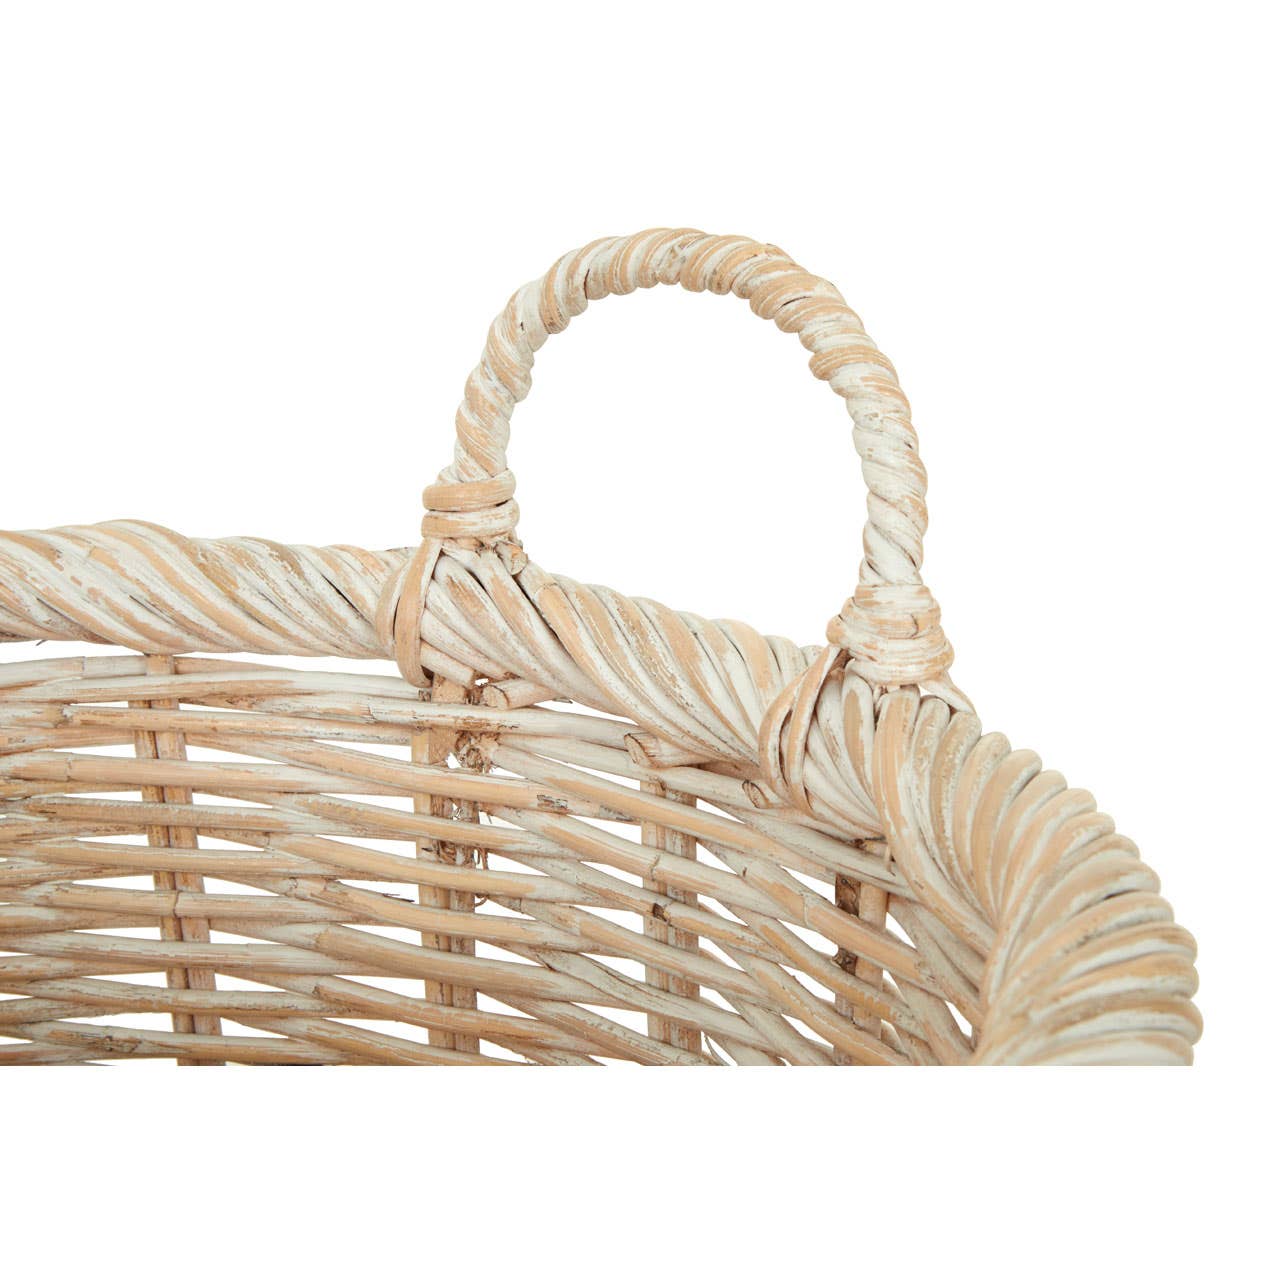 Noosa & Co. Living Argento Set Of Three Kubu Natural Rattan Laundry Baskets House of Isabella UK